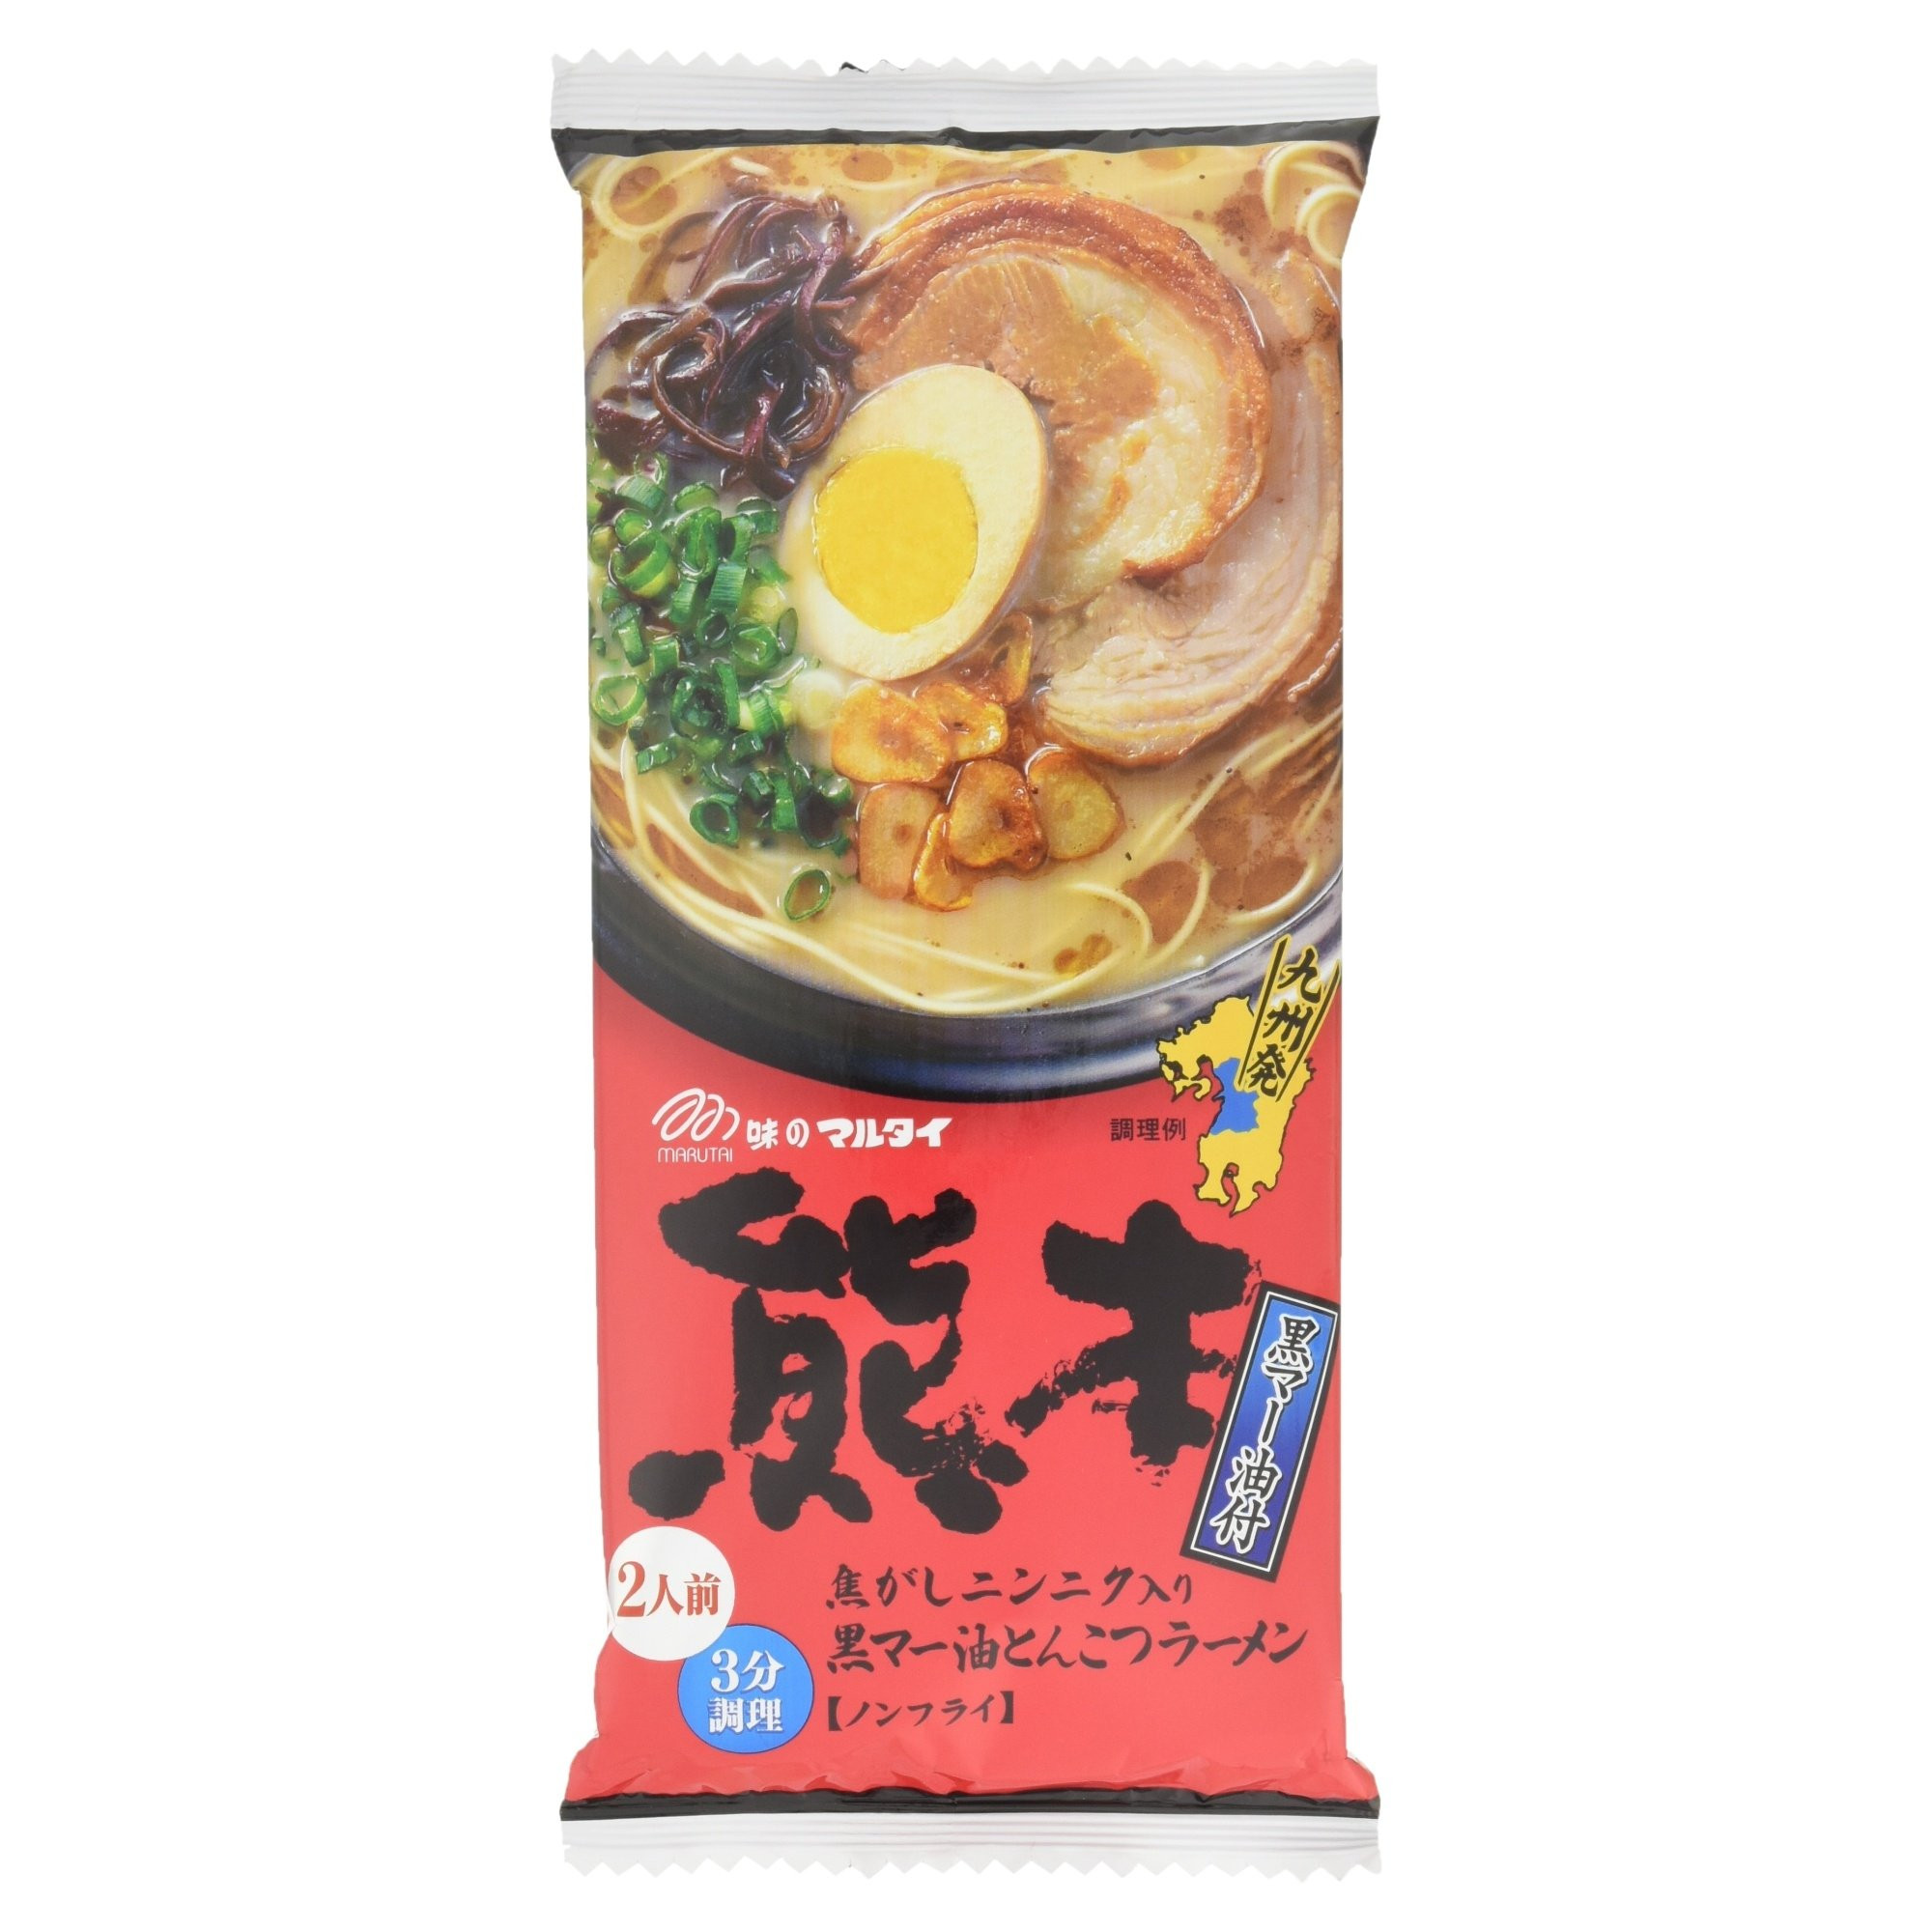 Japanese Instant Noodles
 Amazon Japanese populer Ramen "ICHIRAN" instant